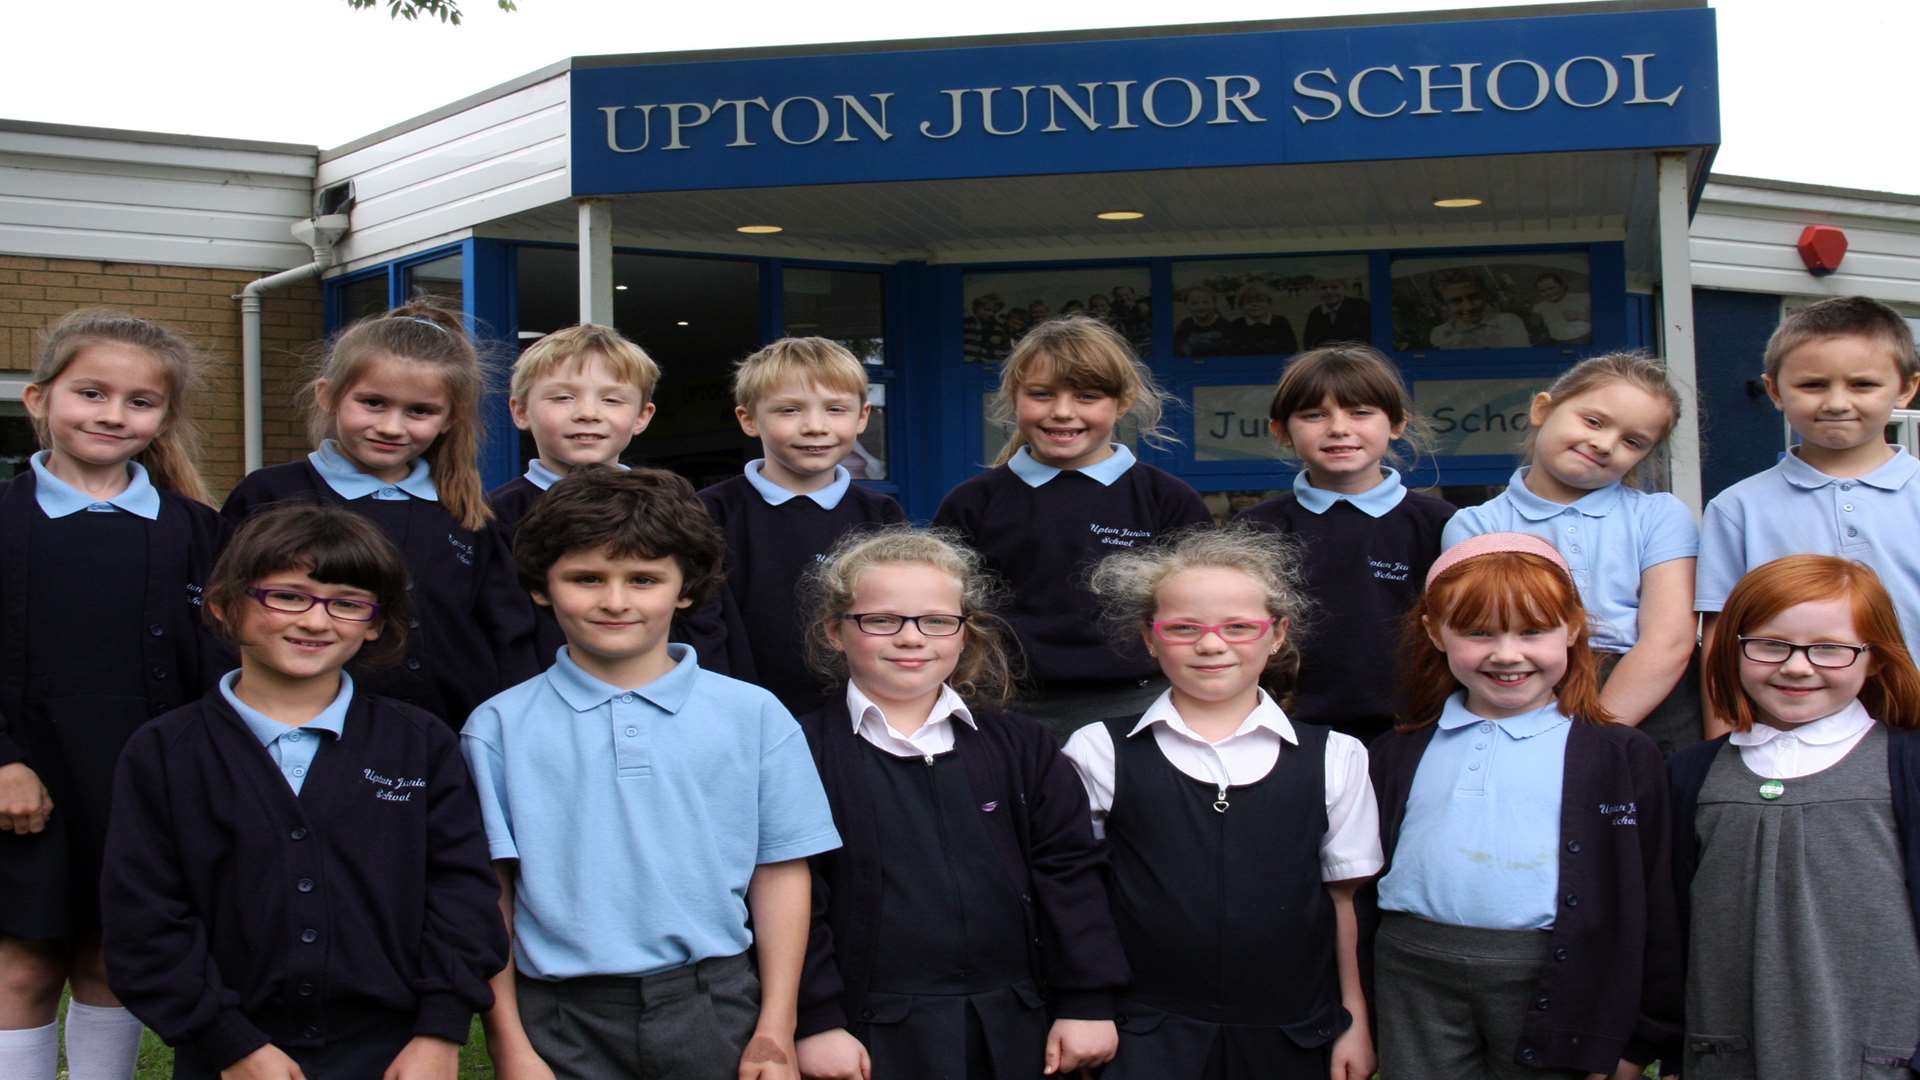 Upton school has seven sets of twins